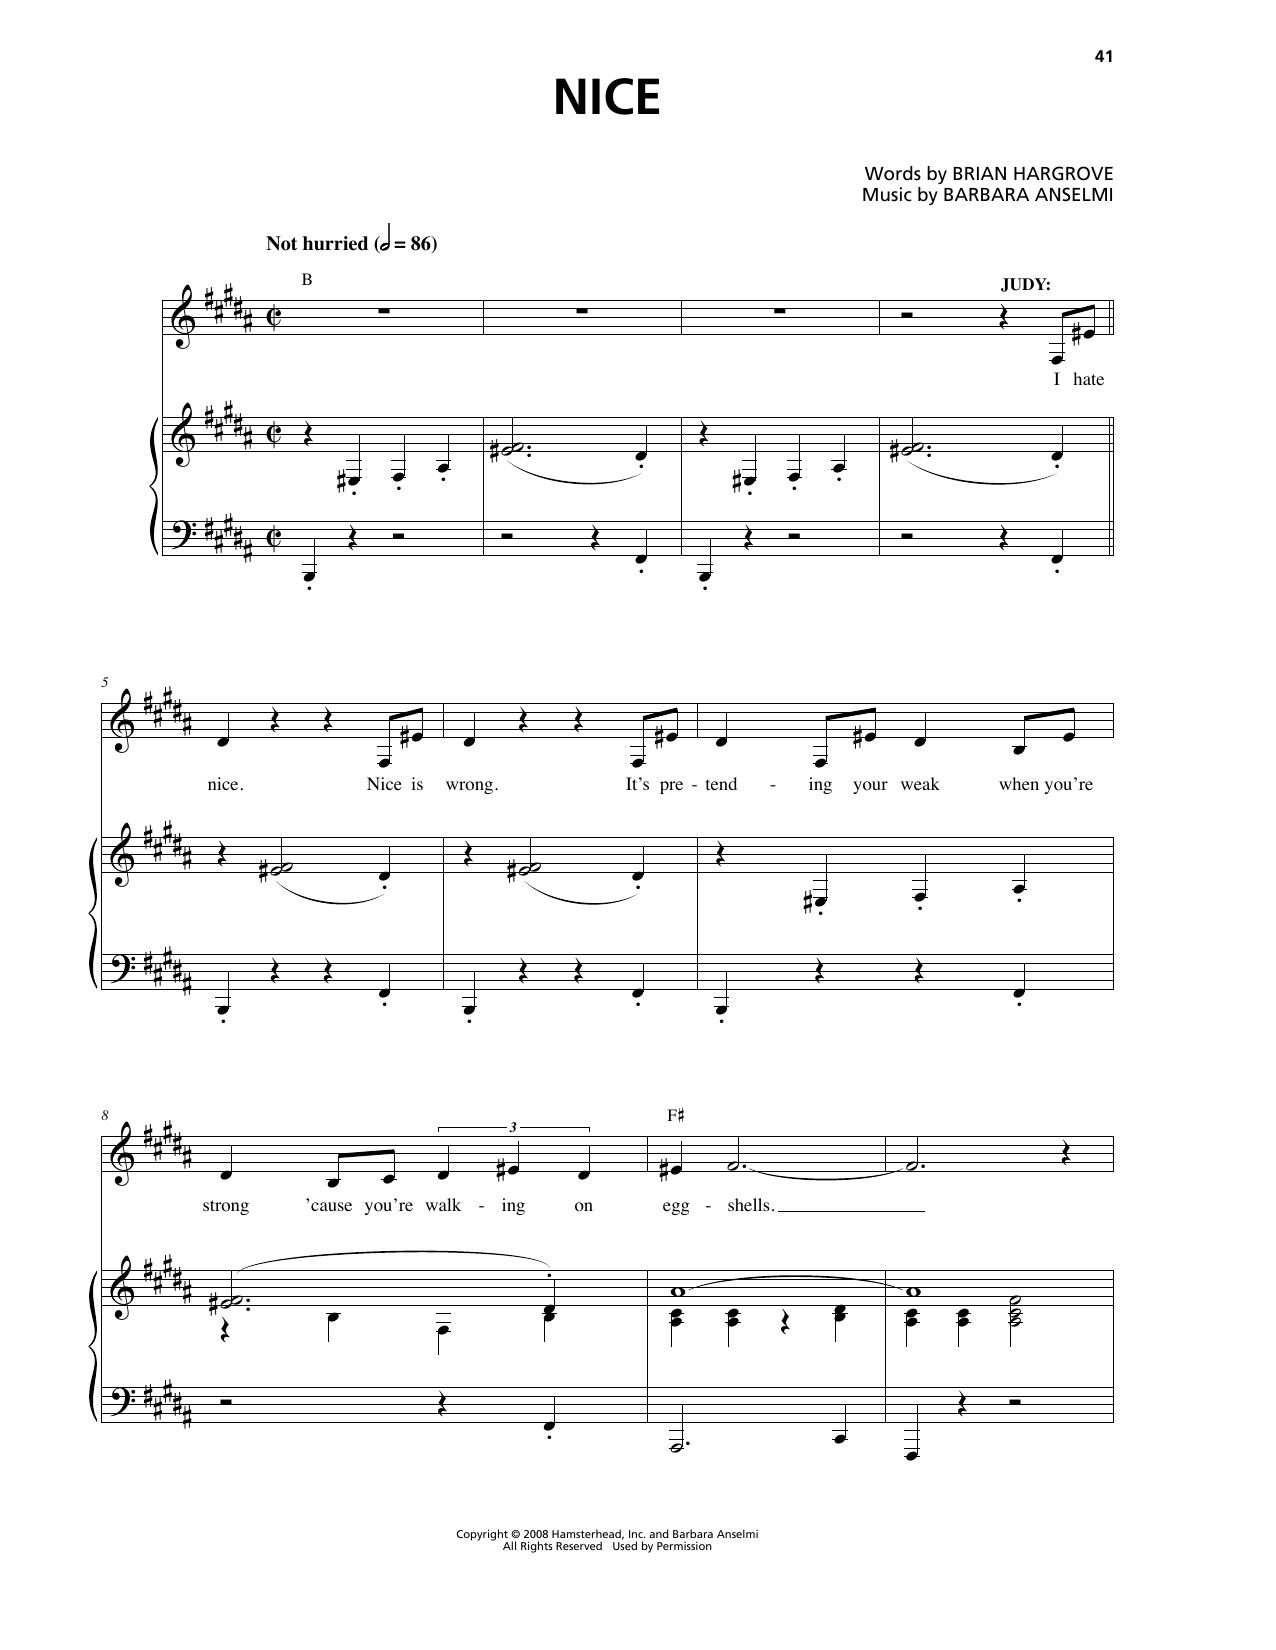 Barbara Anselmi & Brian Hargrove Nice Sheet Music Notes & Chords for Piano & Vocal - Download or Print PDF